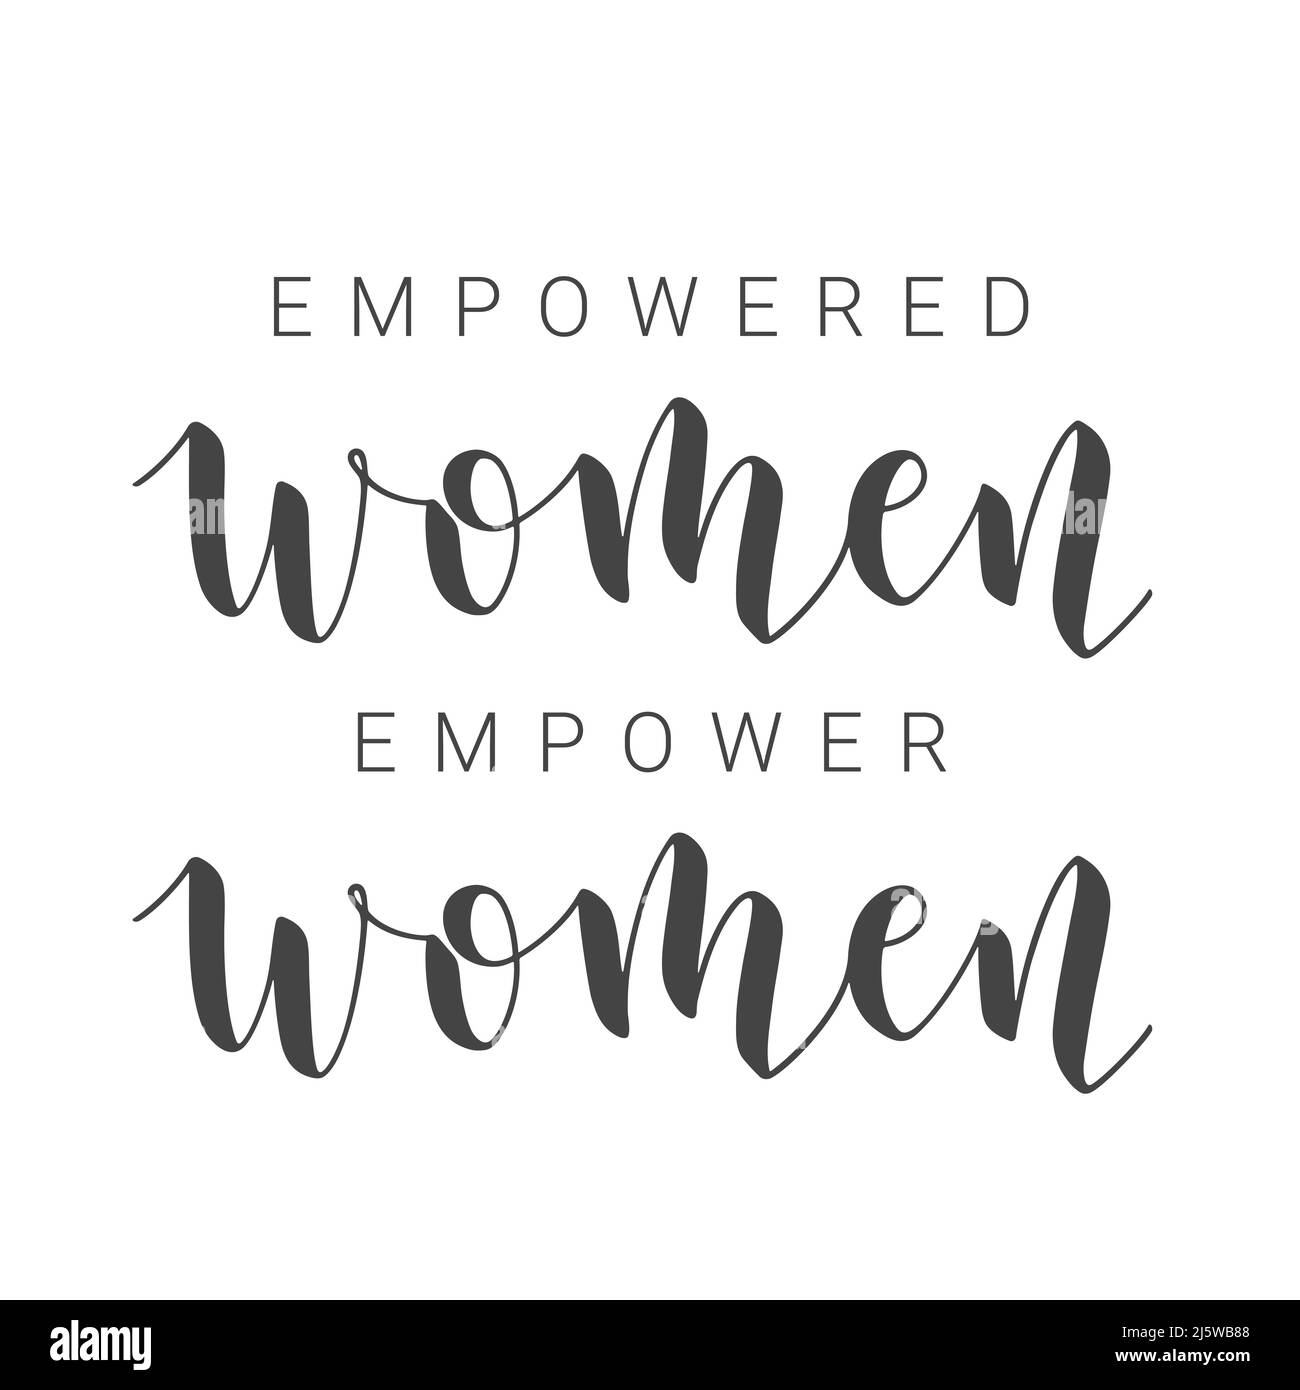 Handwritten Lettering of Empowered Women Empower Women. Template for ...